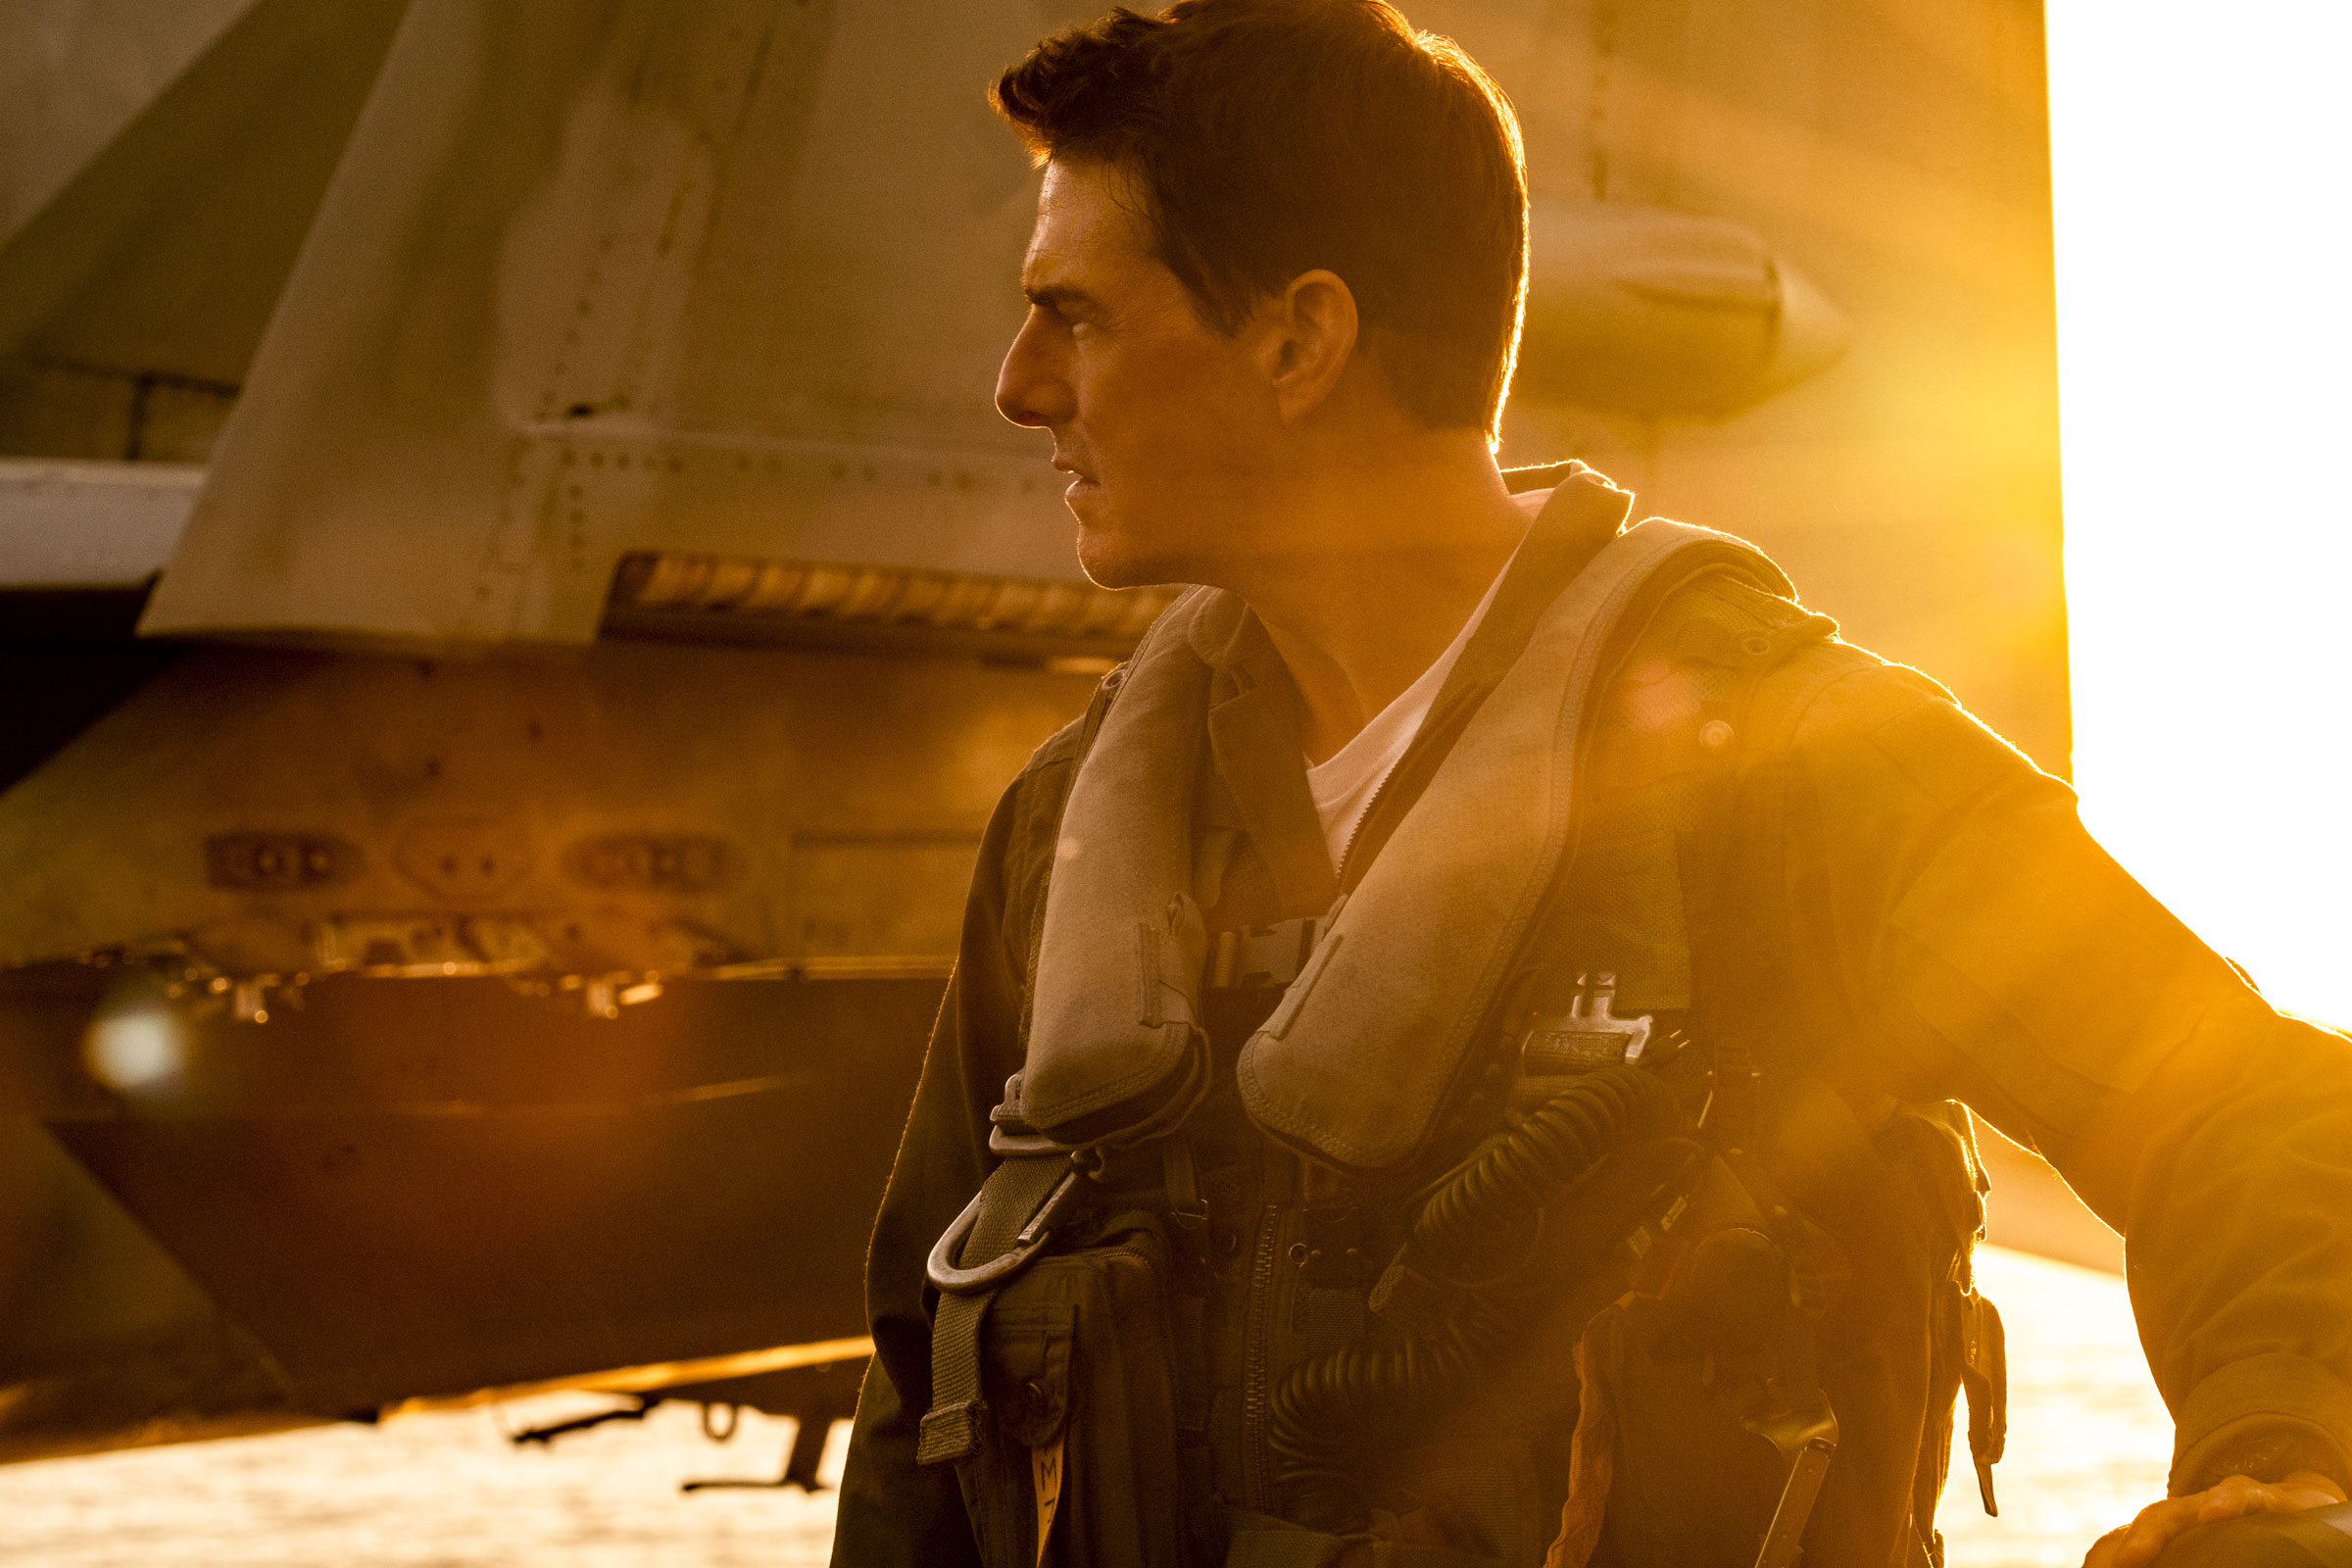 Tom Cruise plays Capt. Pete "Maverick" Mitchell in Top Gun: Maverick